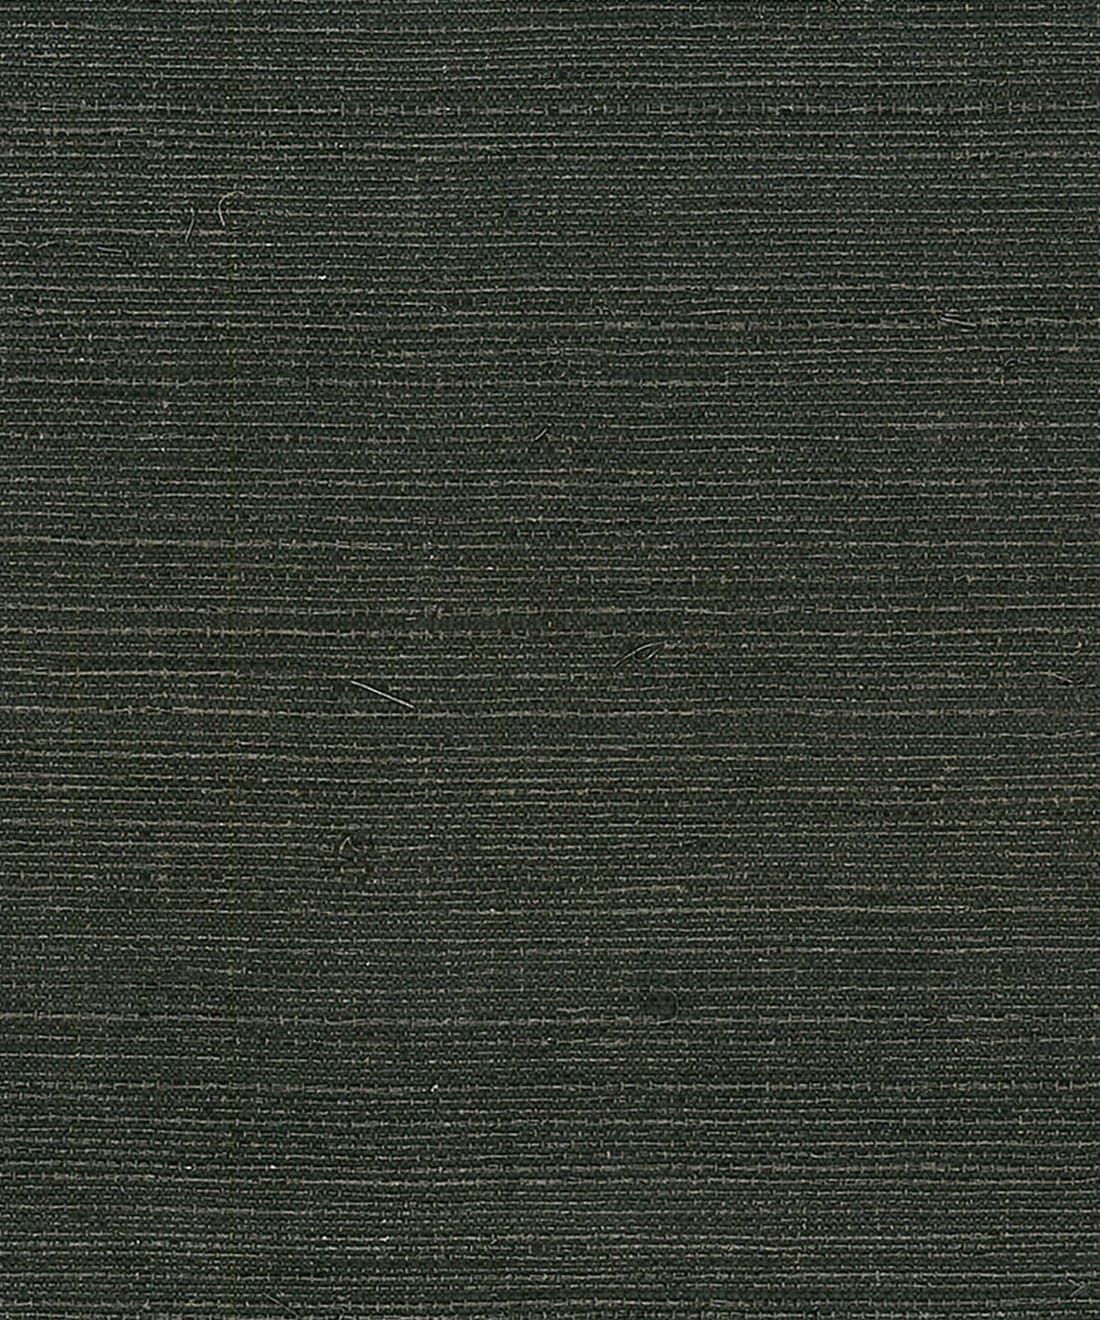 Winter Sisal Grasscloth Wallpaper - Black